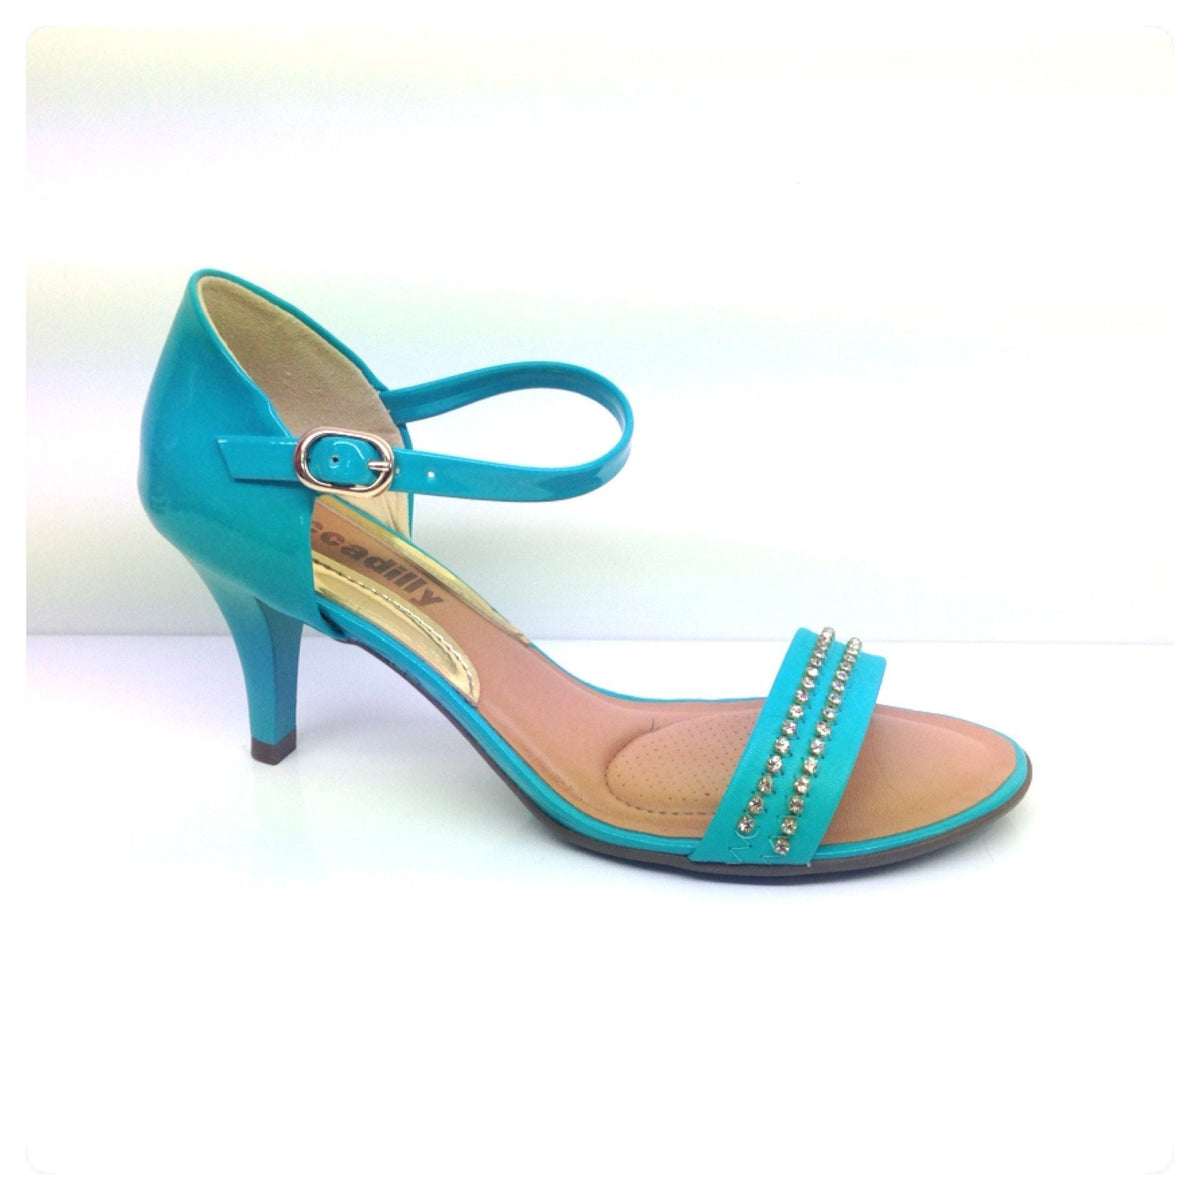 High Heels Women Shoes PNG Images & PSDs for Download | PixelSquid -  S115539209